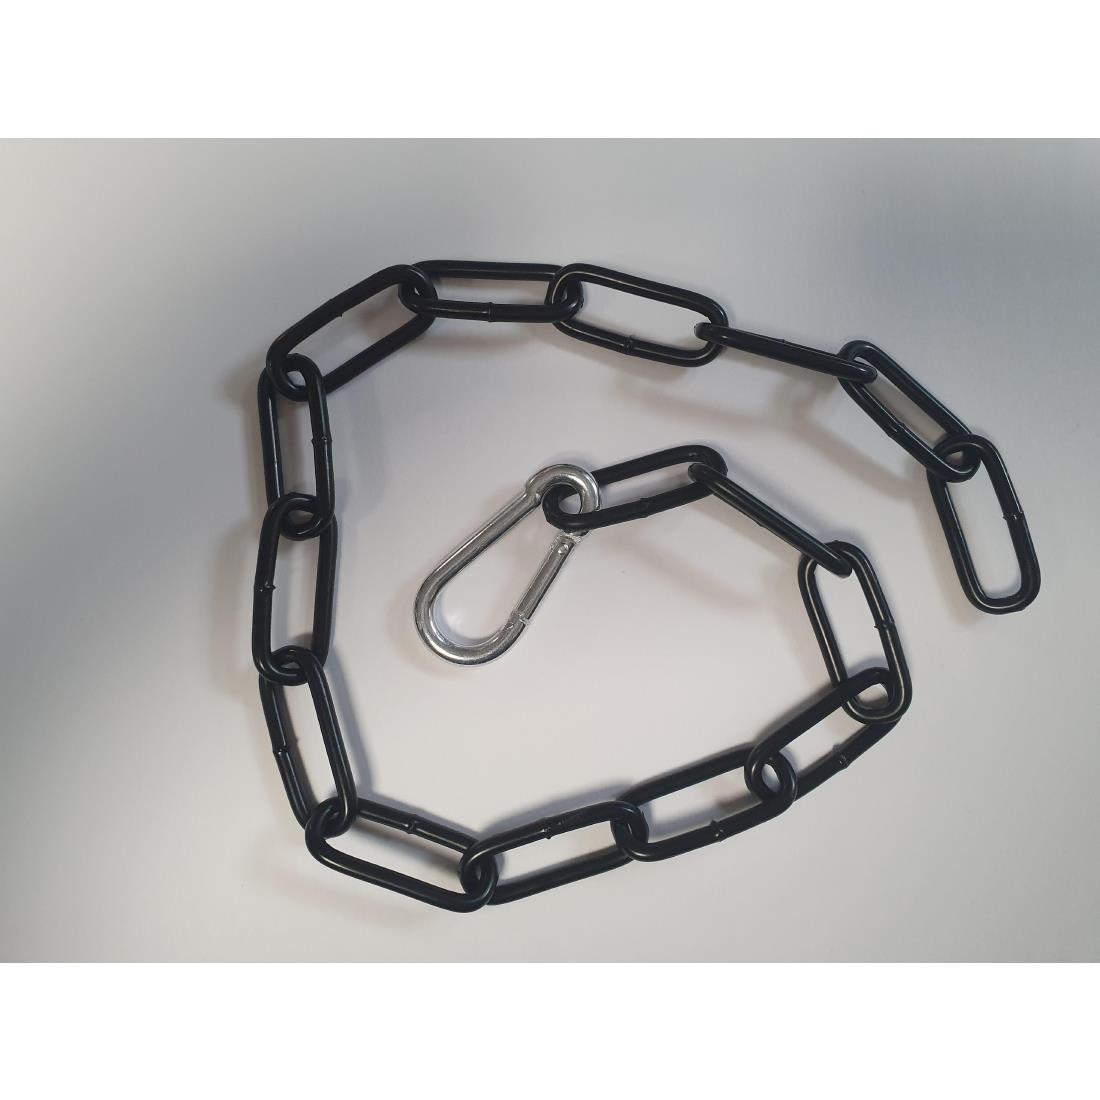 Bolero Black-Plated Barrier Chain 1.5m